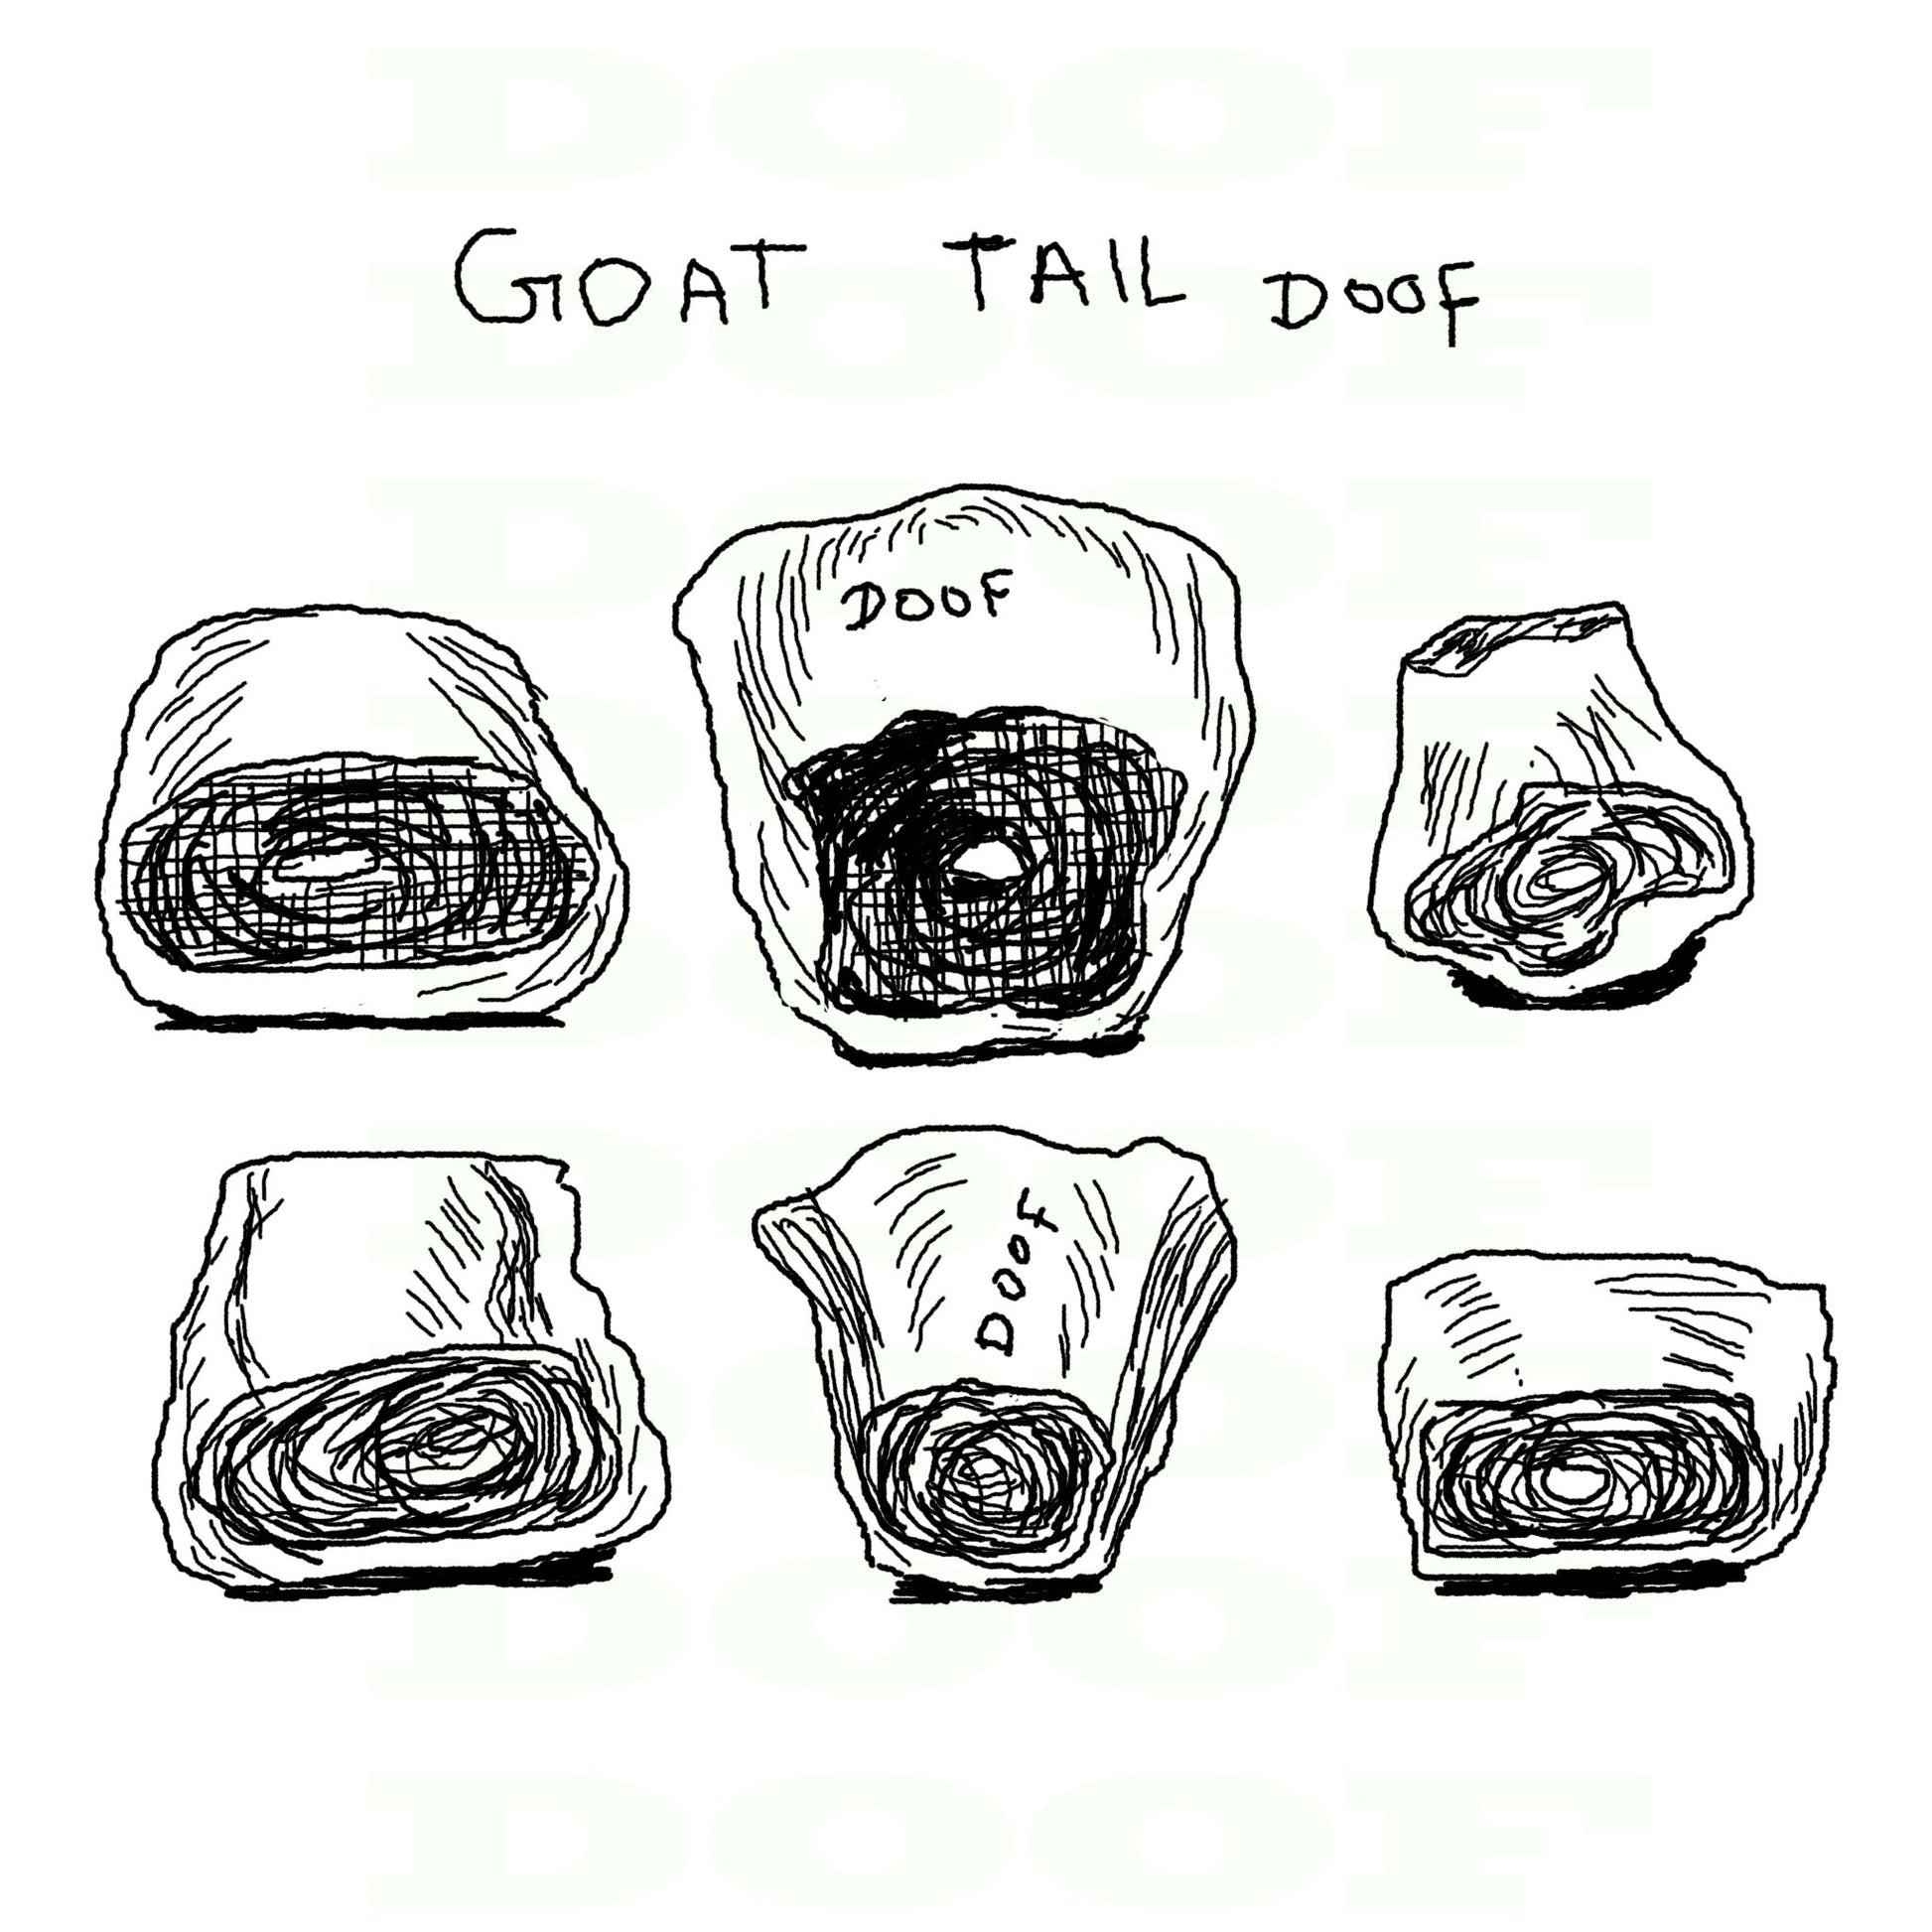 Goat tail Doof sketch